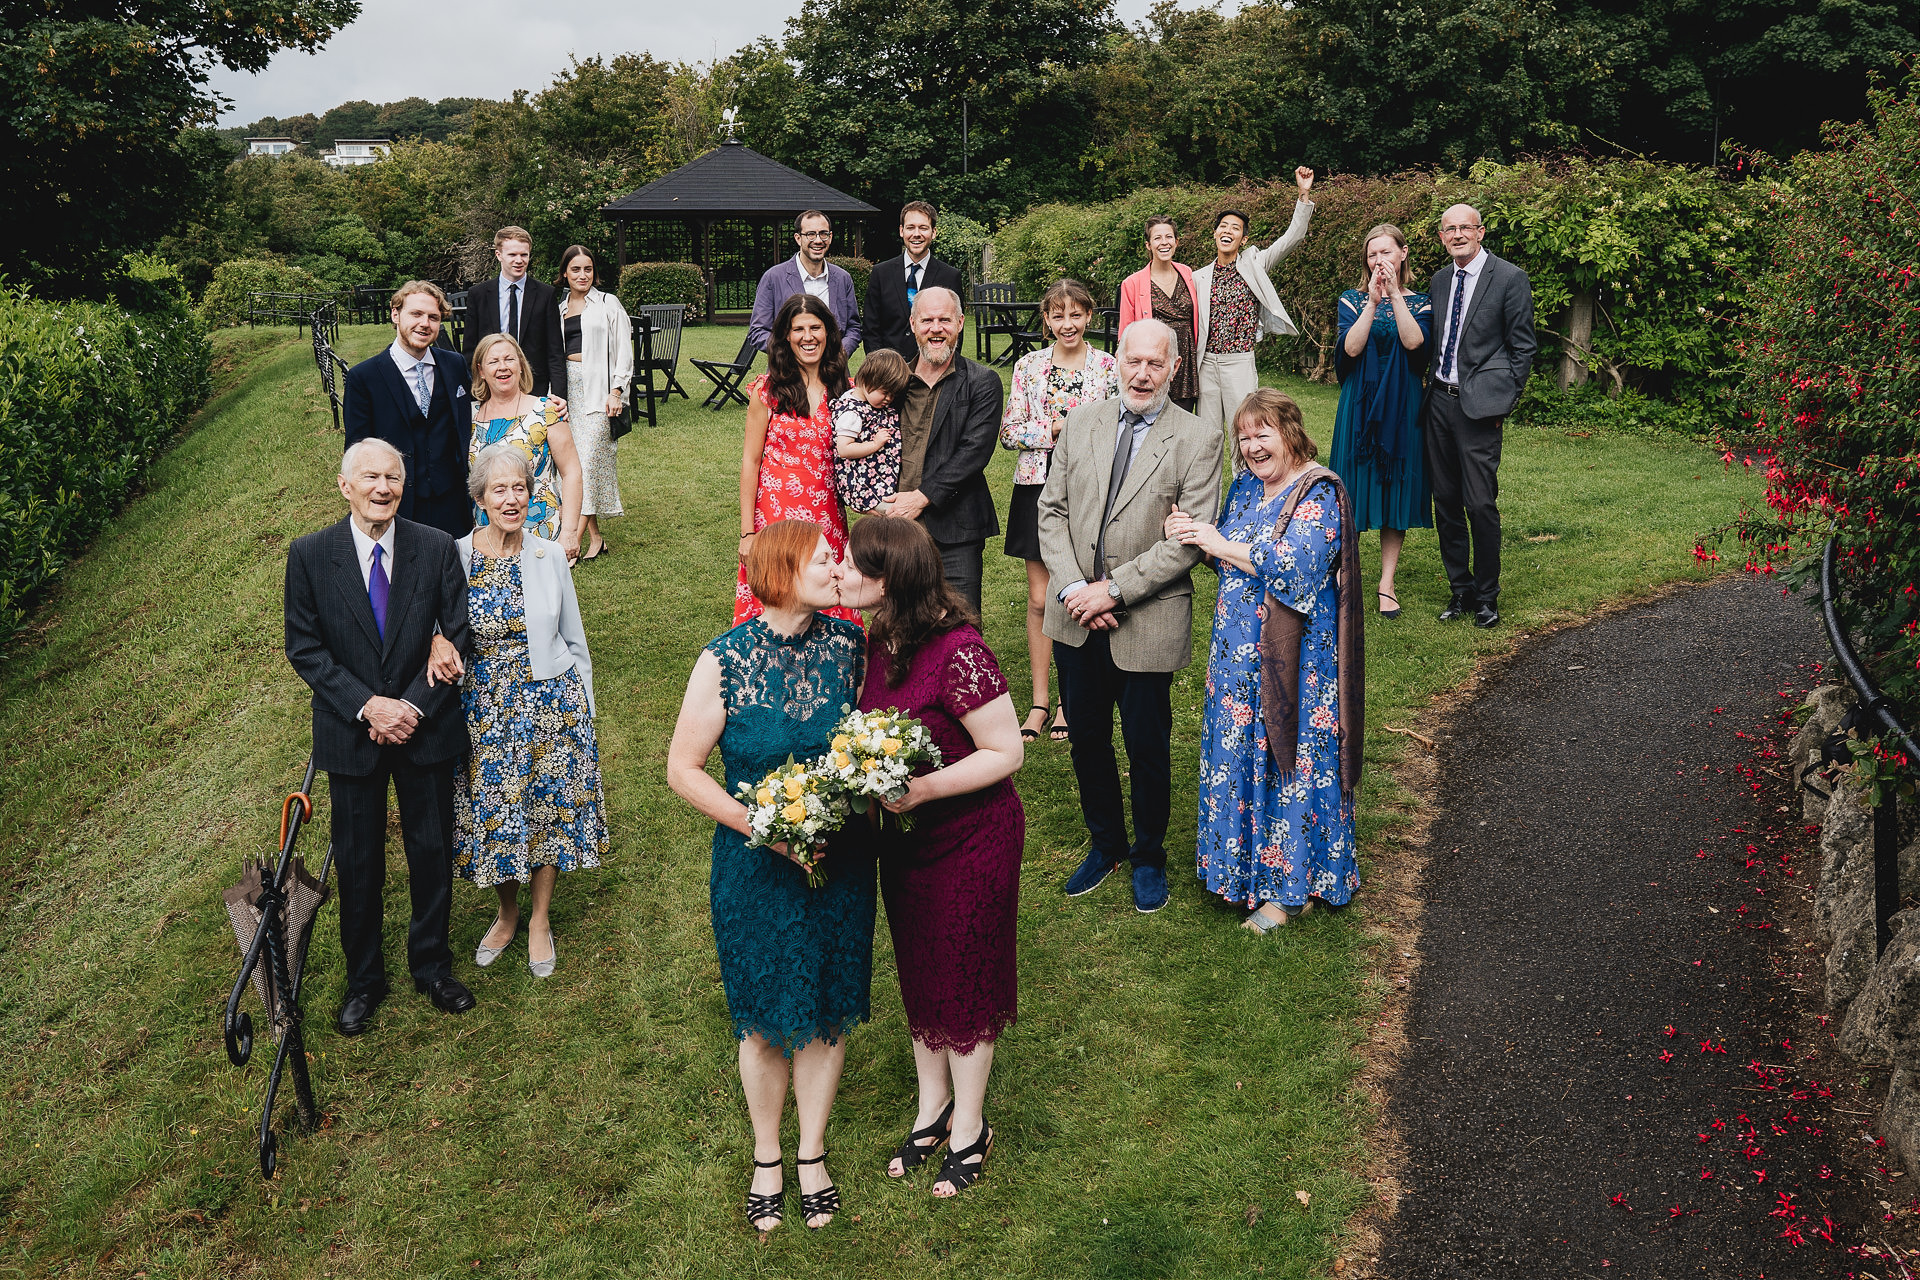 Socially distanced wedding group photo